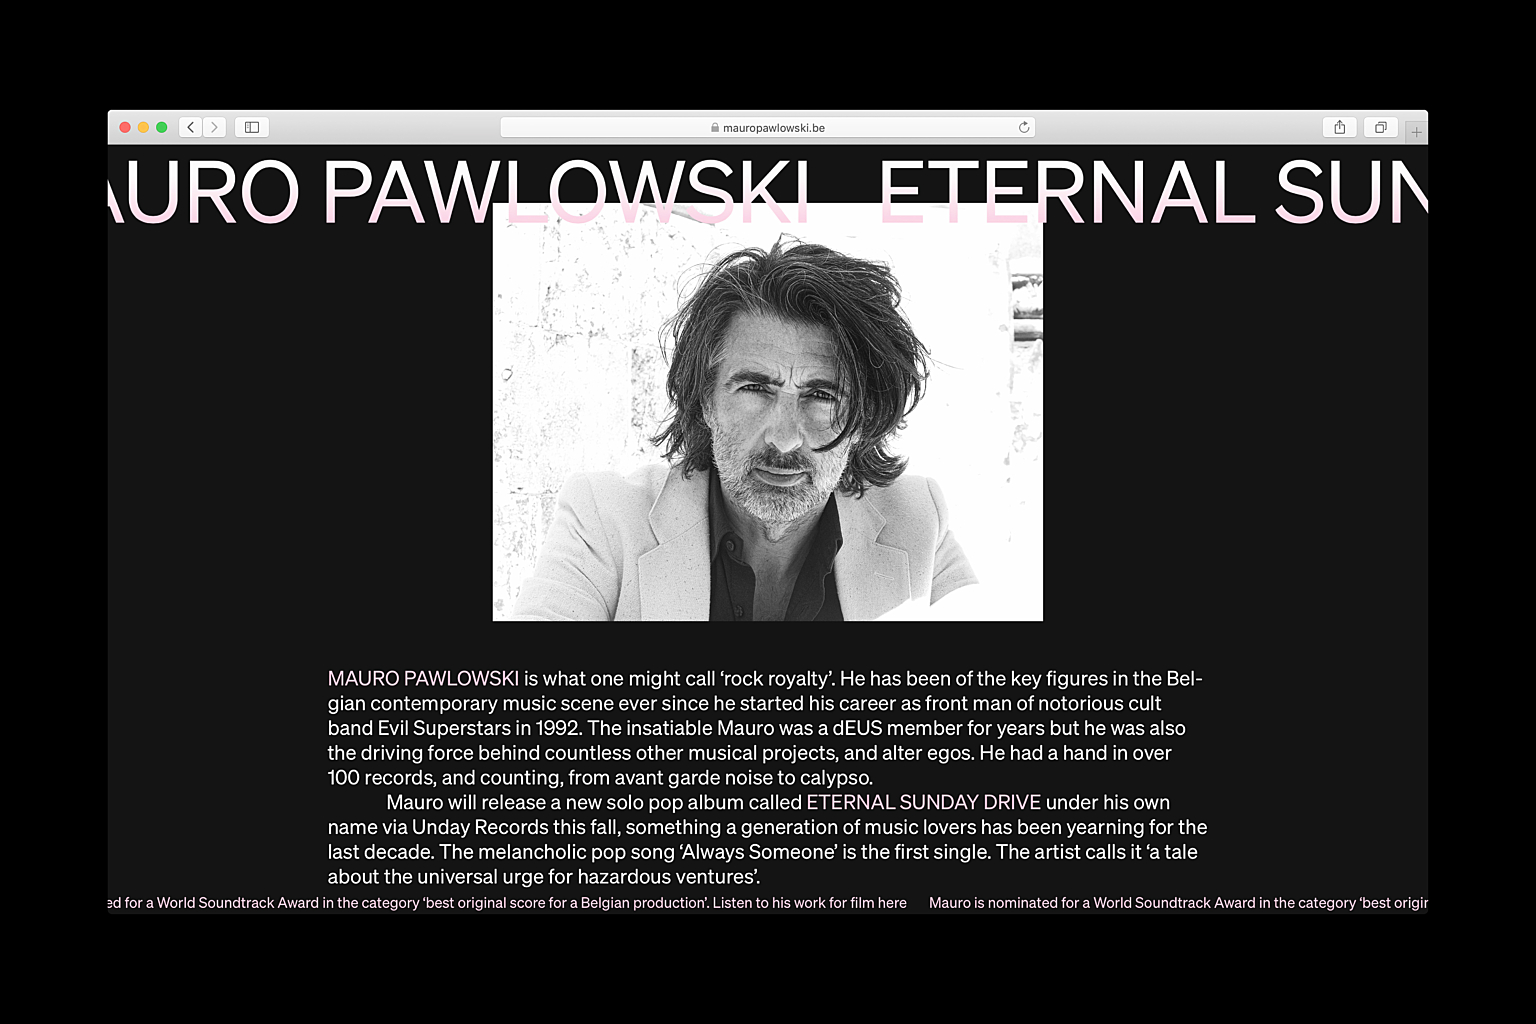 Mauro pawlowski website 1